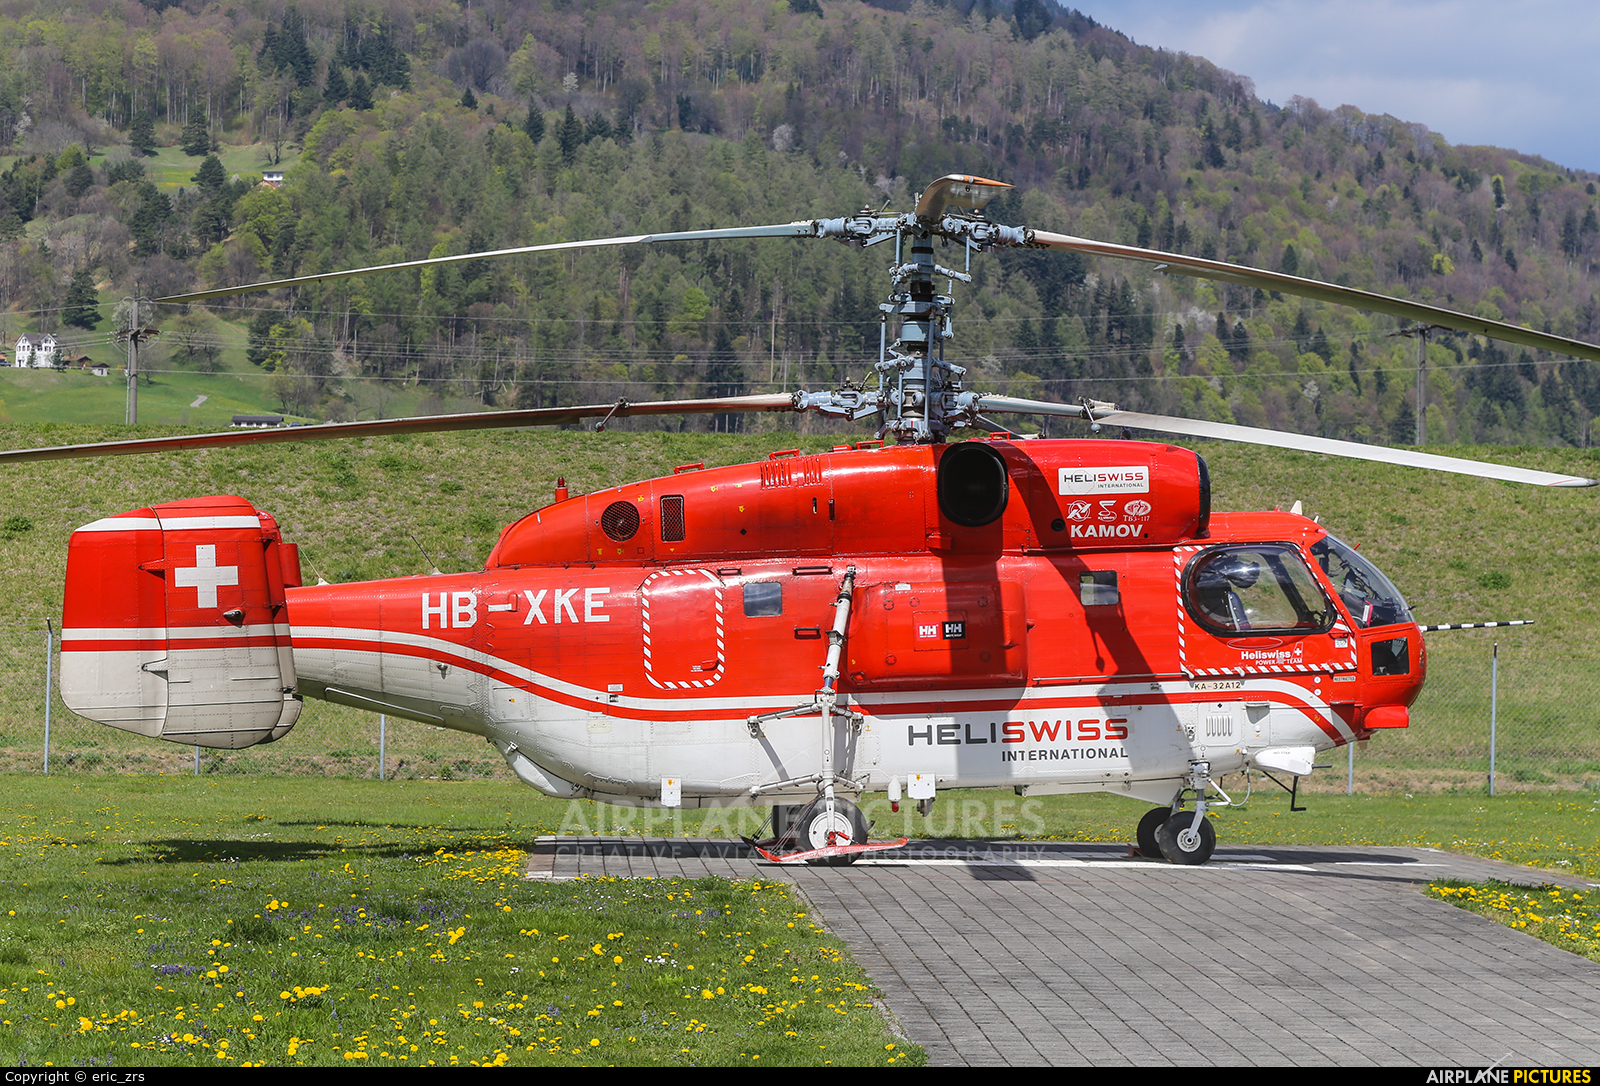 Heliswiss international HB-XKE aircraft at Balzers heliport